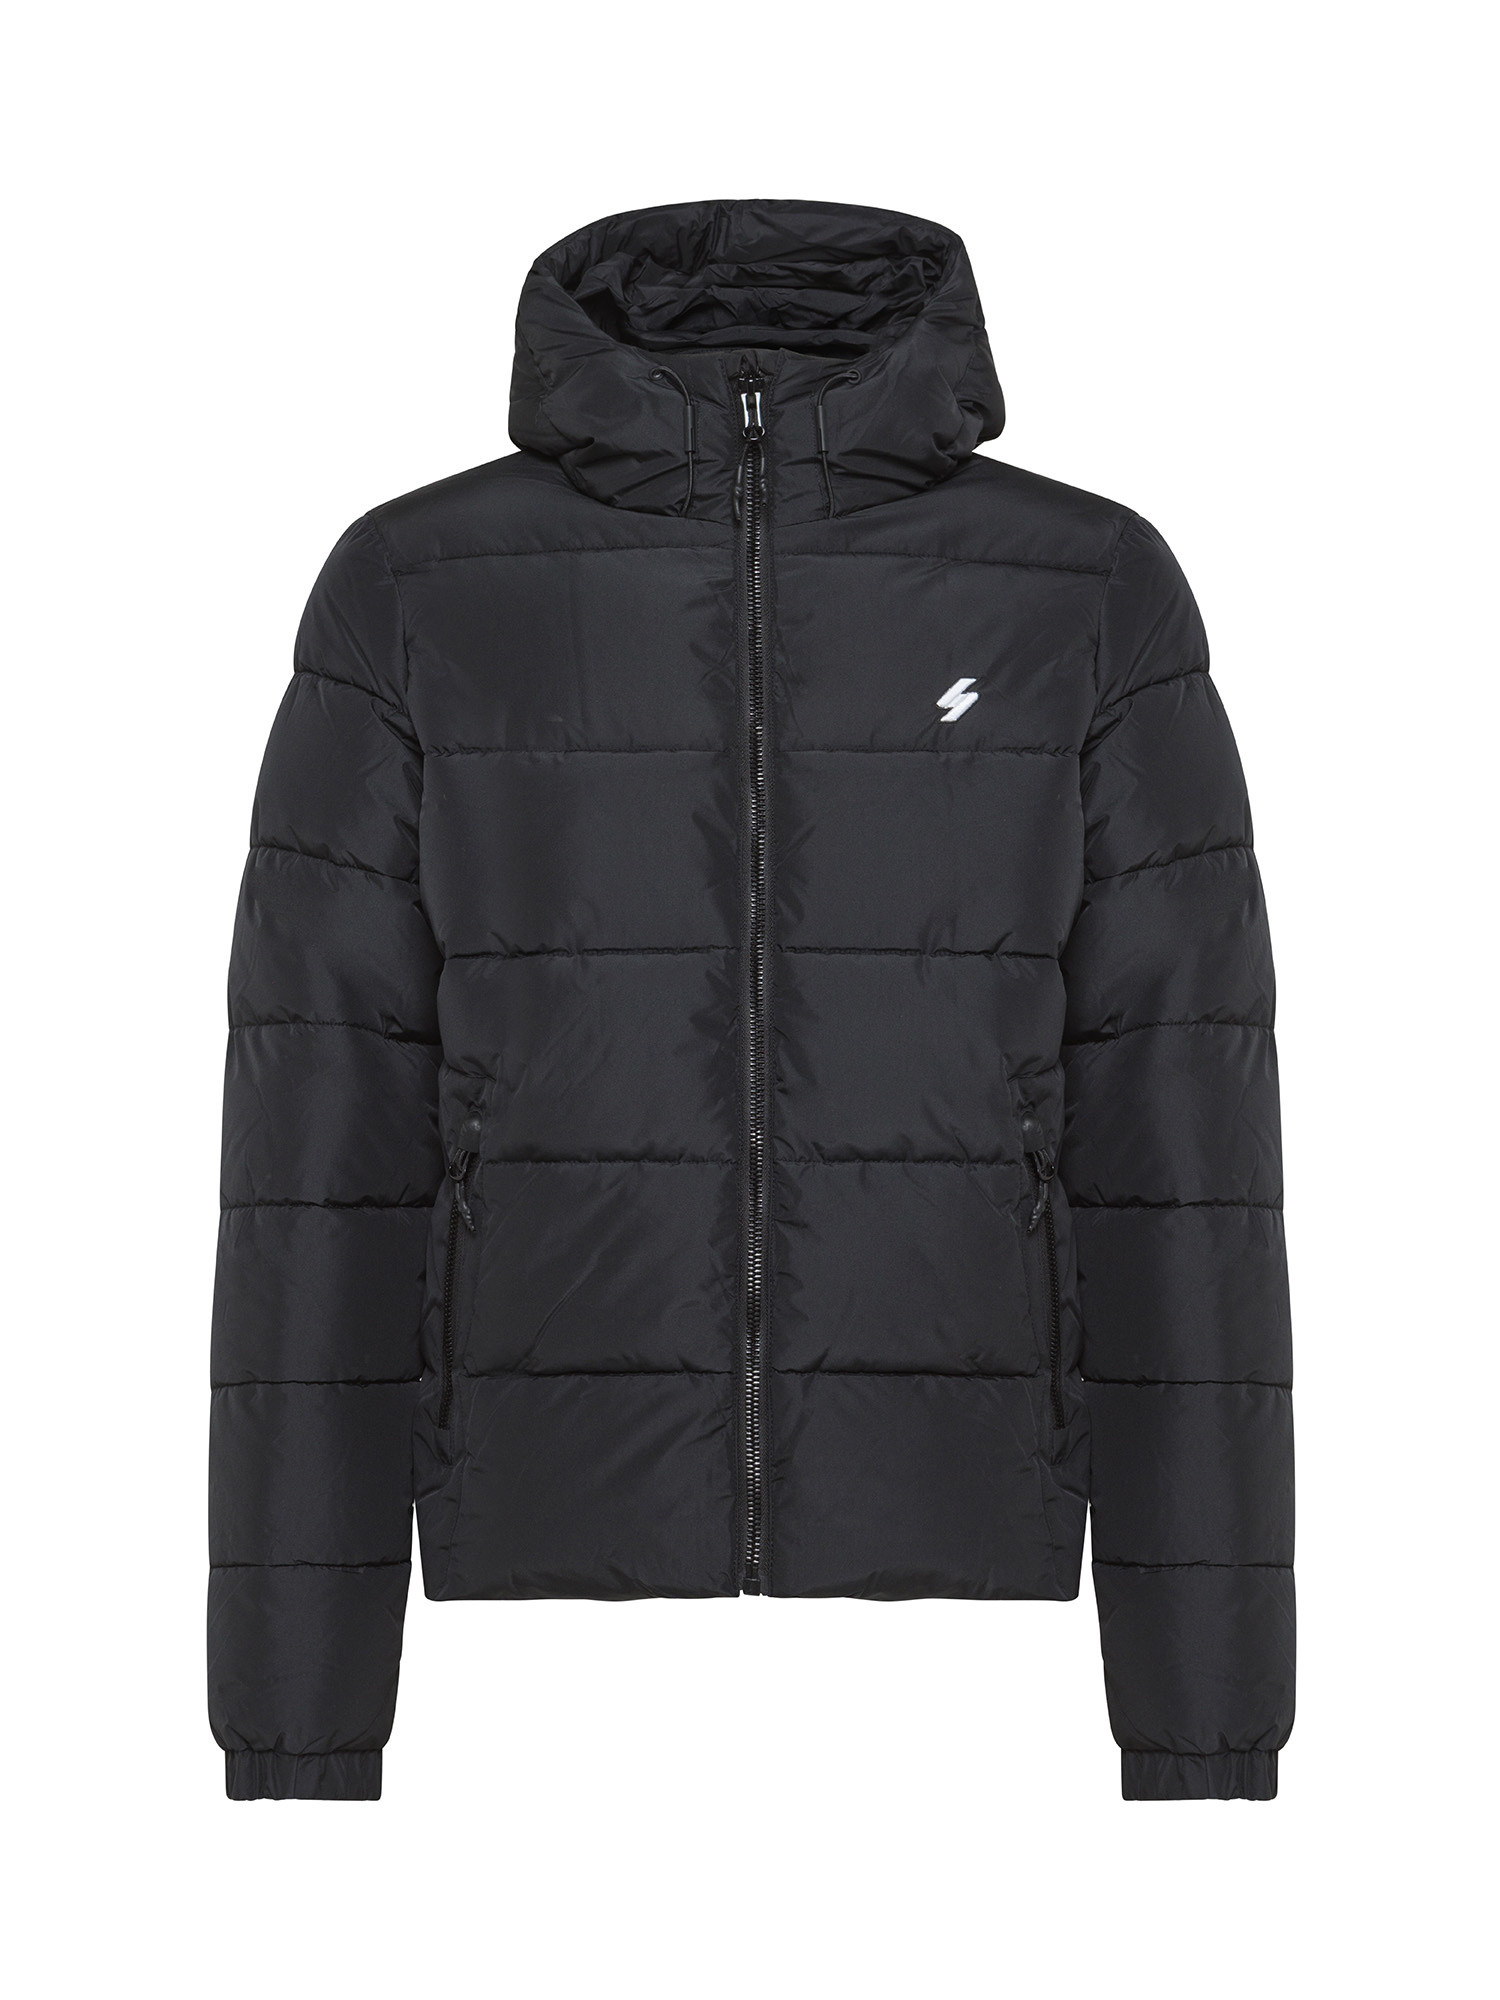 Superdry - Padded down jacket with hood, Black, large image number 0